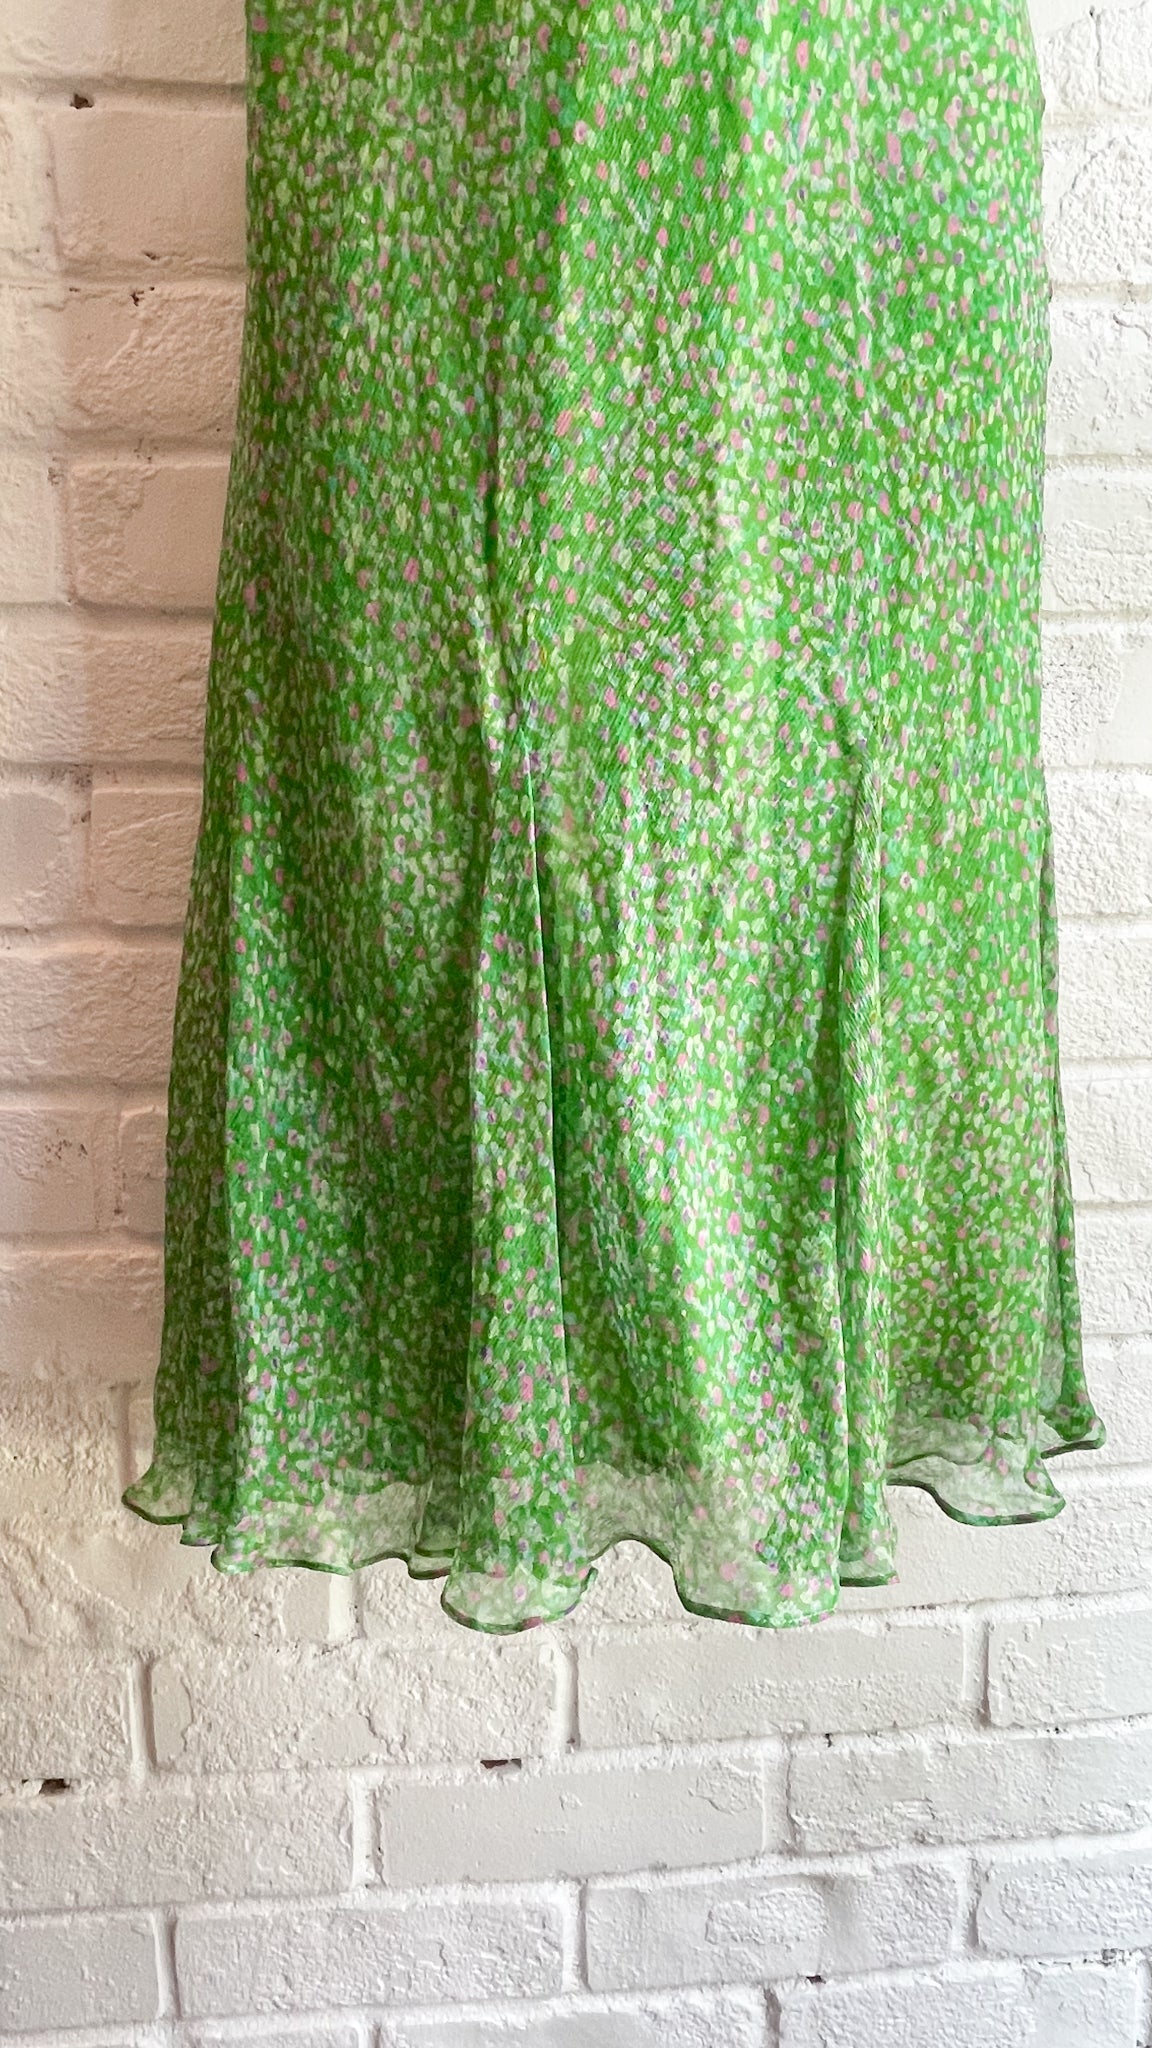 Edina Ronay Kelly Green Floral 100% Silk Garden Party Dress - UK 8 / US 2